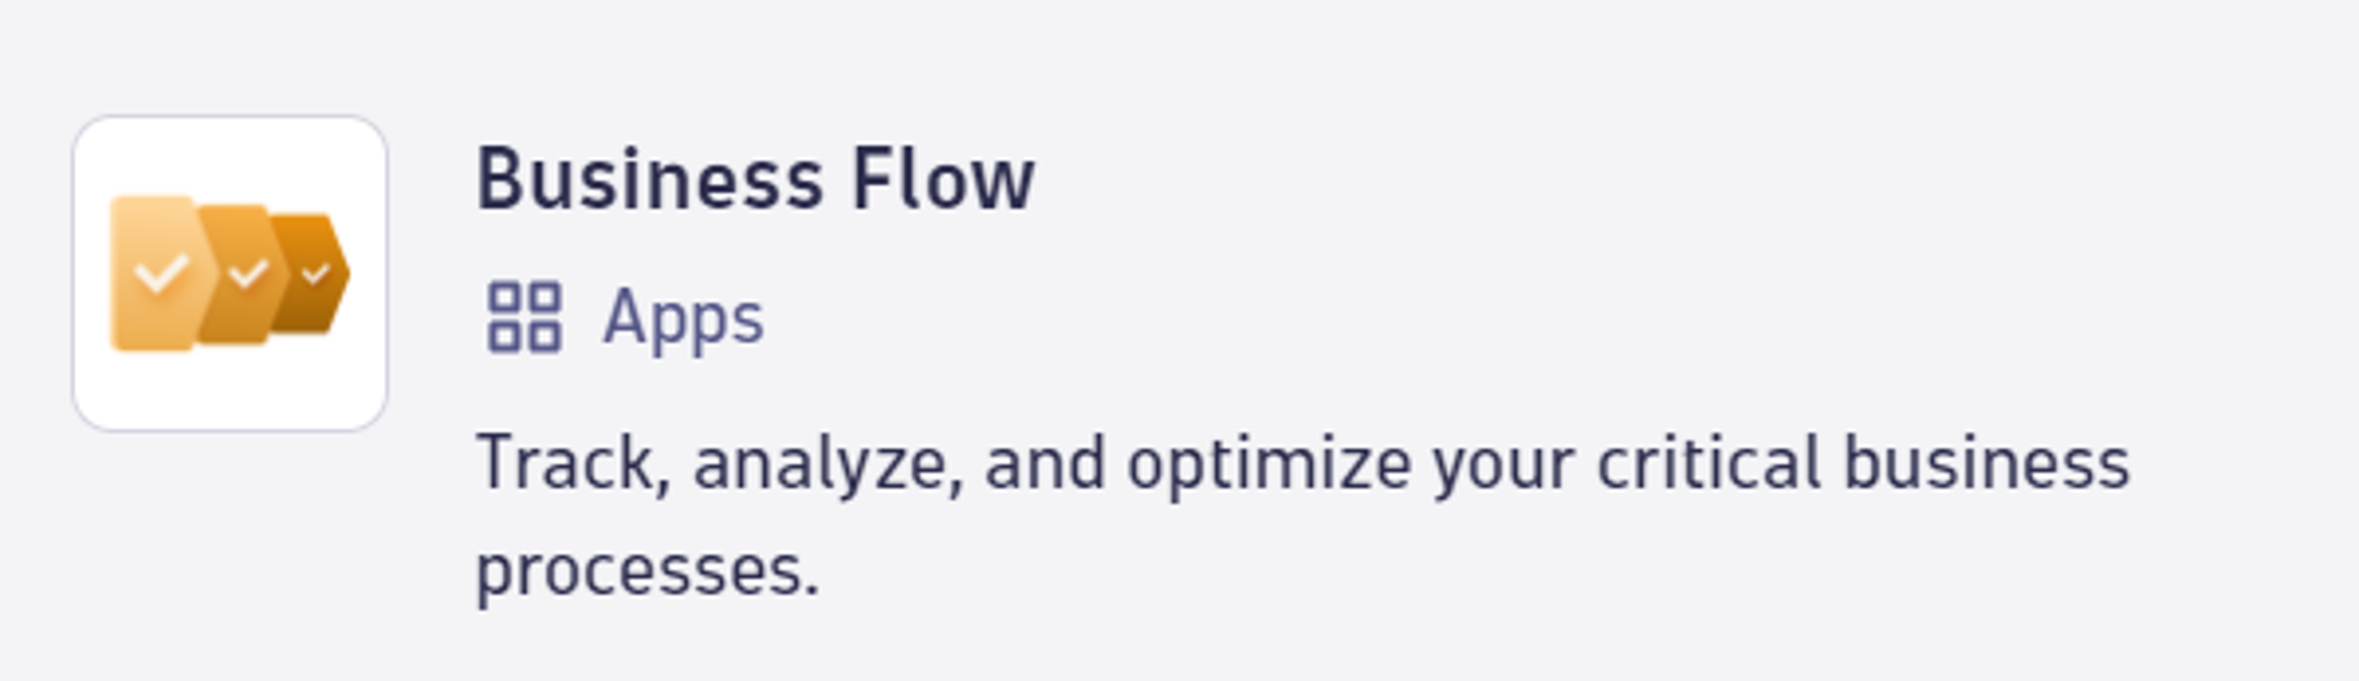 Business Flow app